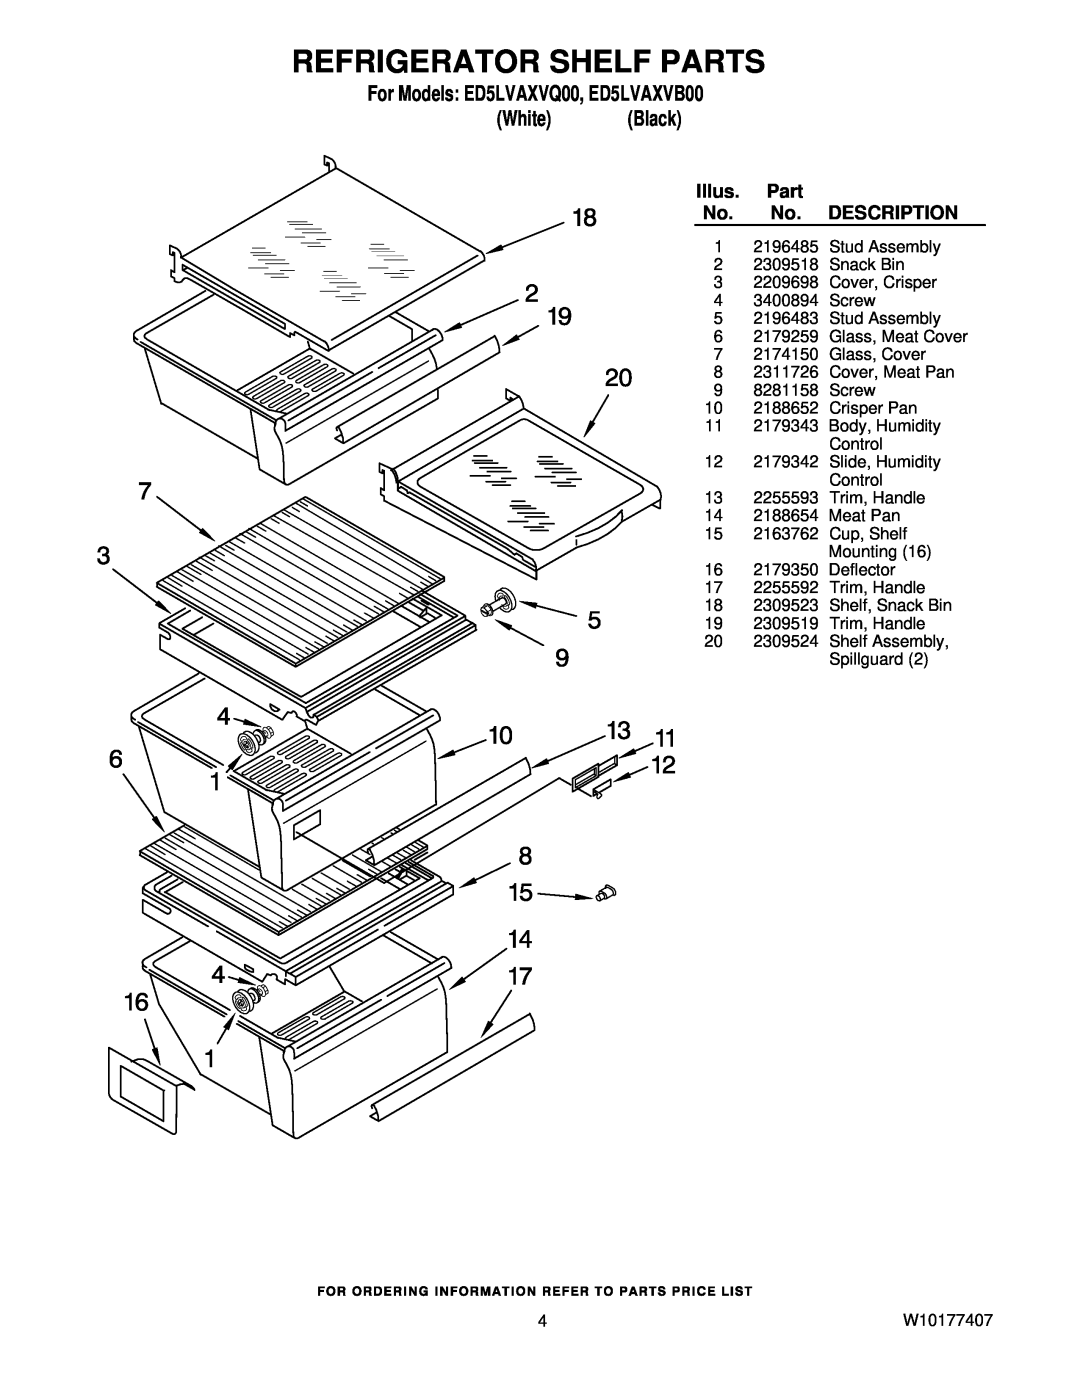 Whirlpool manual Refrigerator Shelf Parts, For Models ED5LVAXVQ00, ED5LVAXVB00 White Black, Illus, Description 